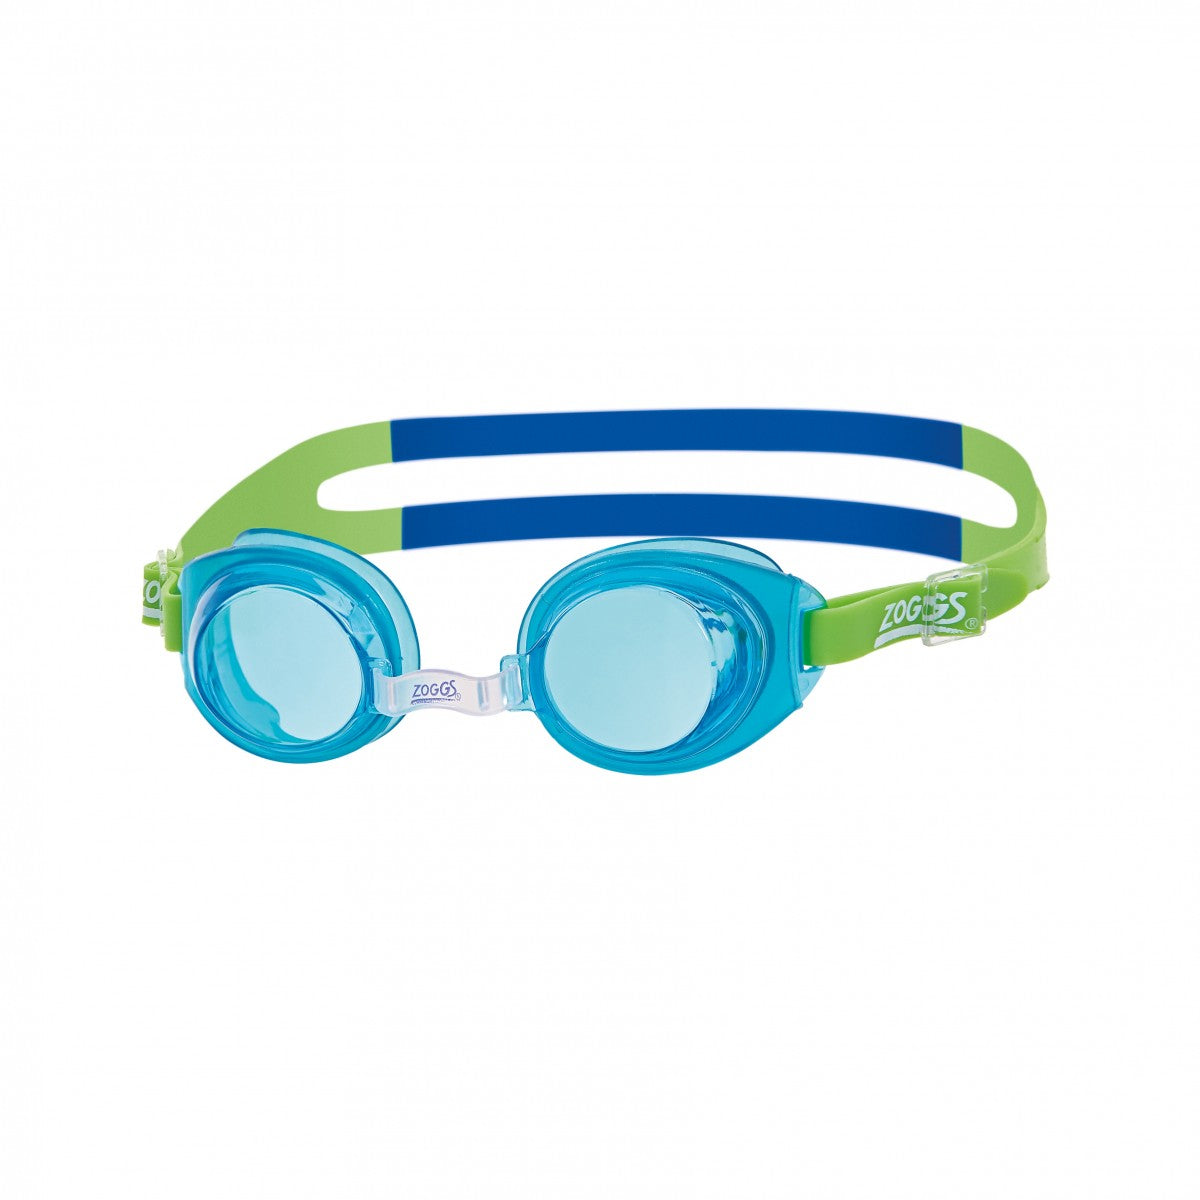 Zoggs Little Ripper 2019 Aqua Blue swimming goggles 0-6 years